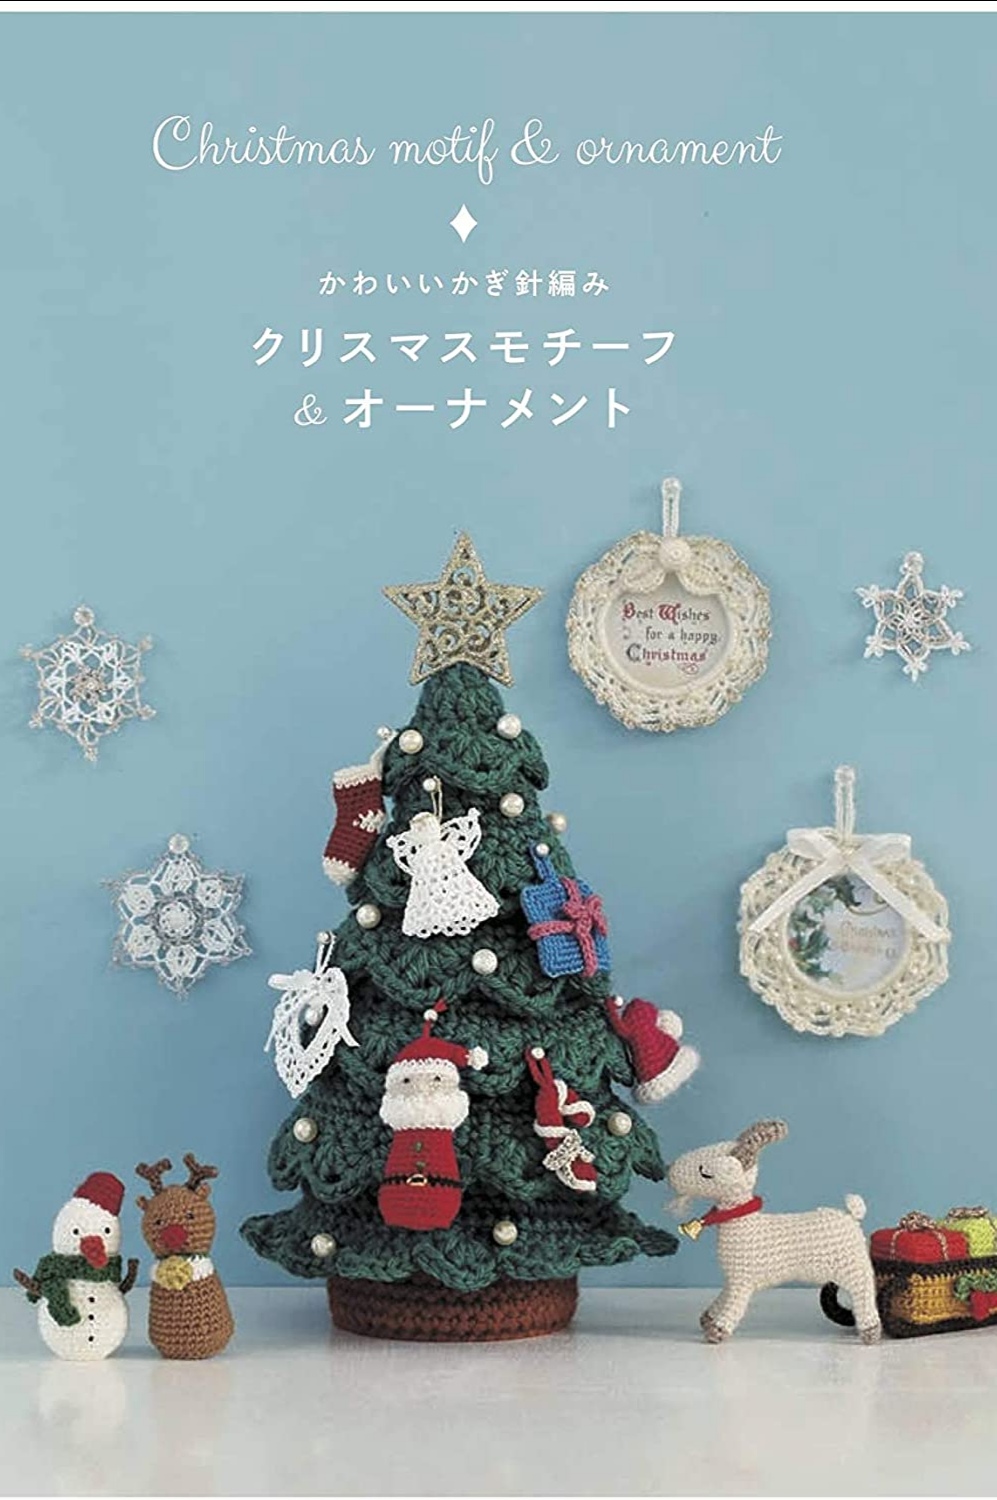 Cute crochet Christmas motifs & ornaments